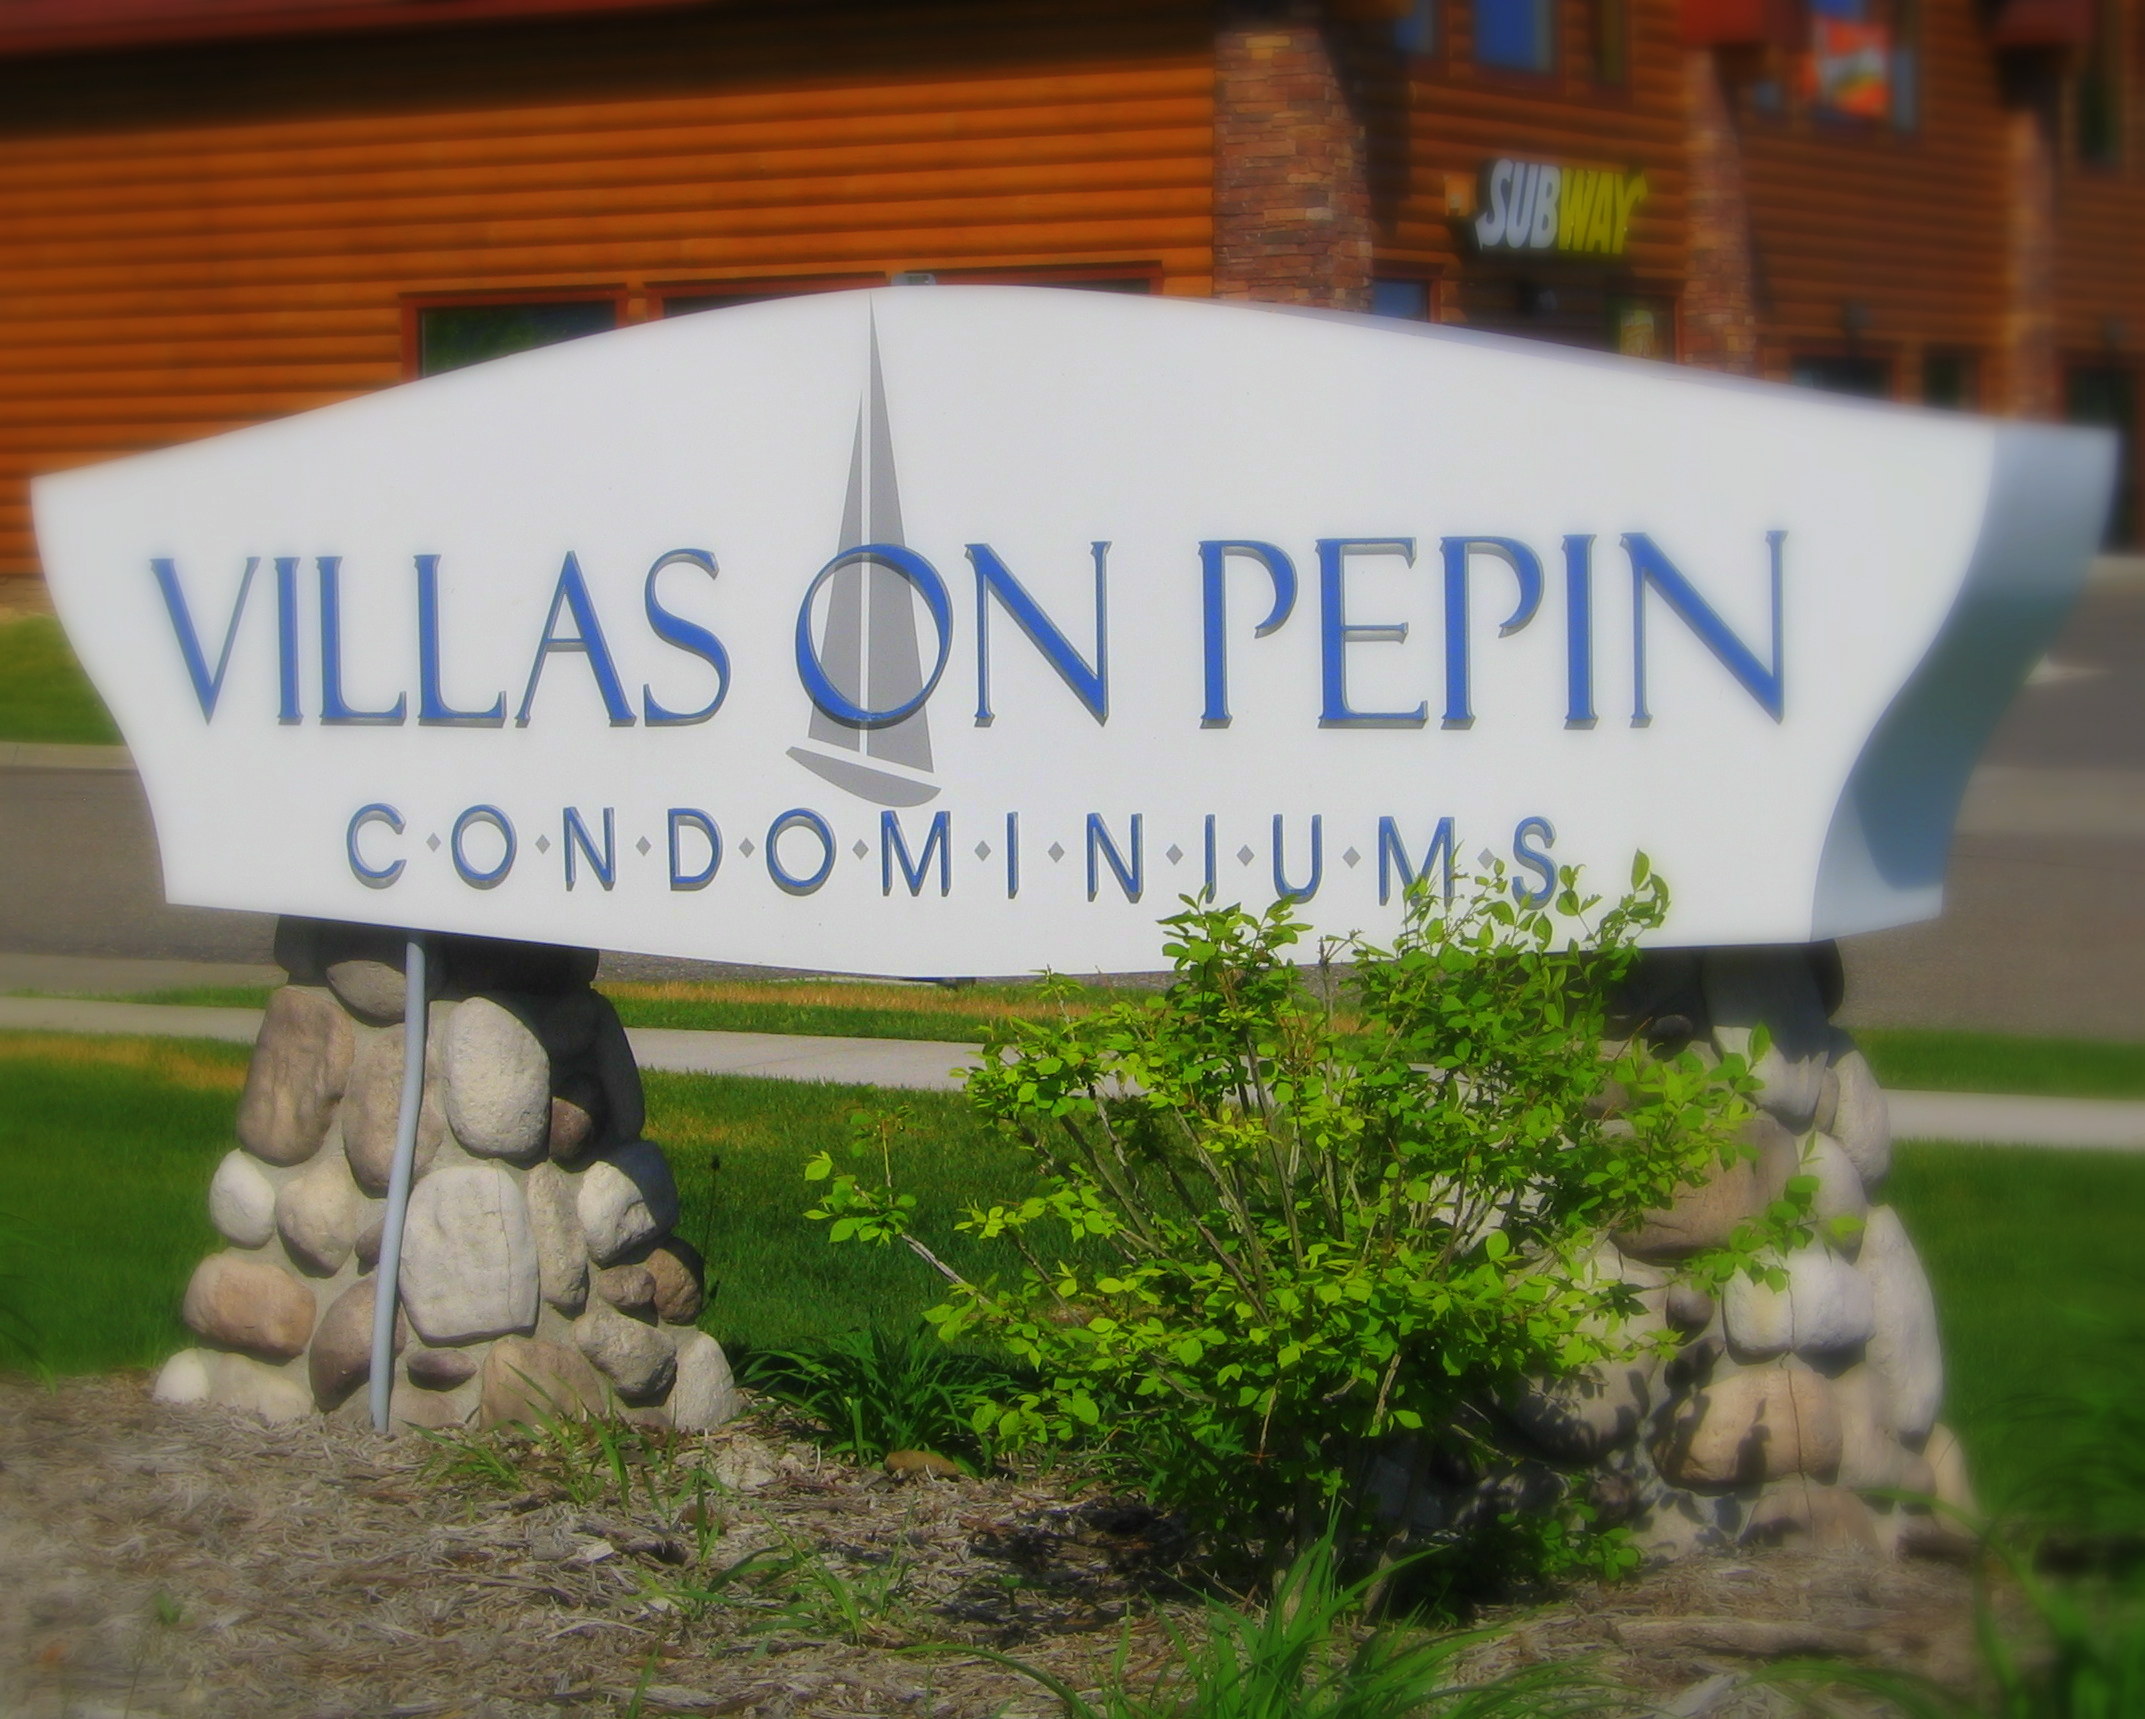 Villas on Pepin - Condominiums on Lake Pepin, Minnesota by Global Mercantile and Americas Development, Pablo Murillo